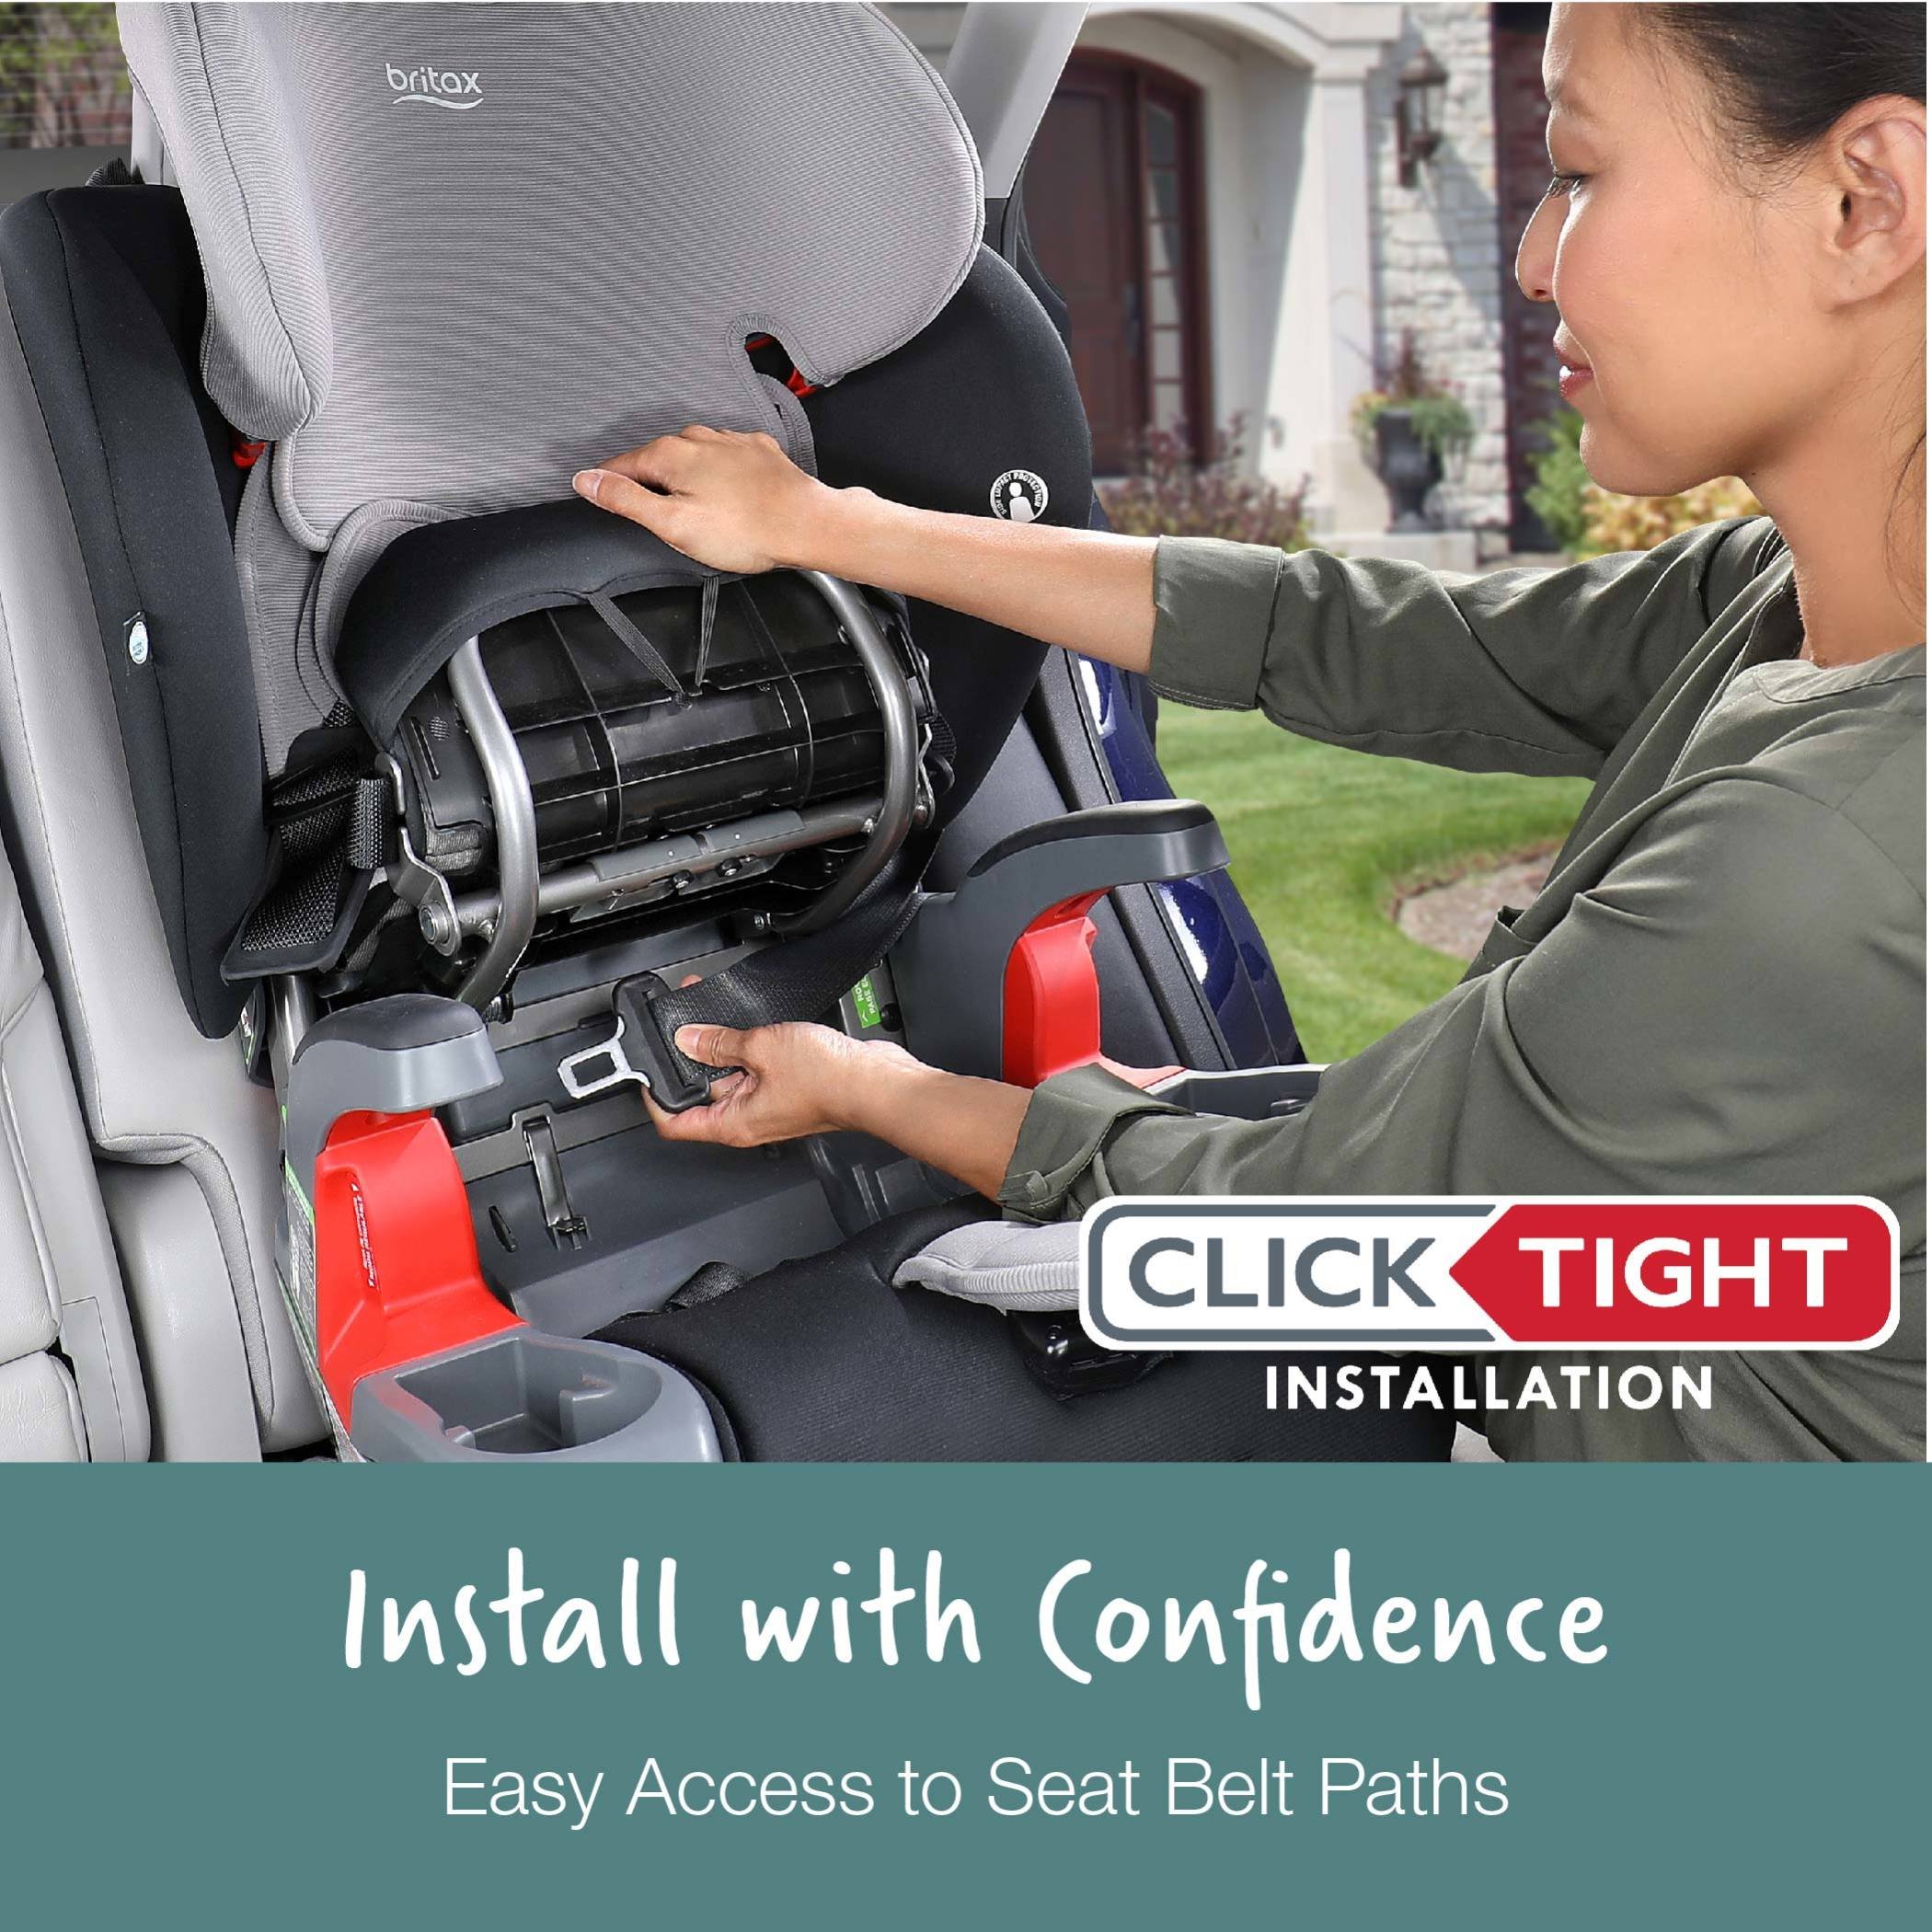 Mother installing car seat using clicktight installation (Copy)